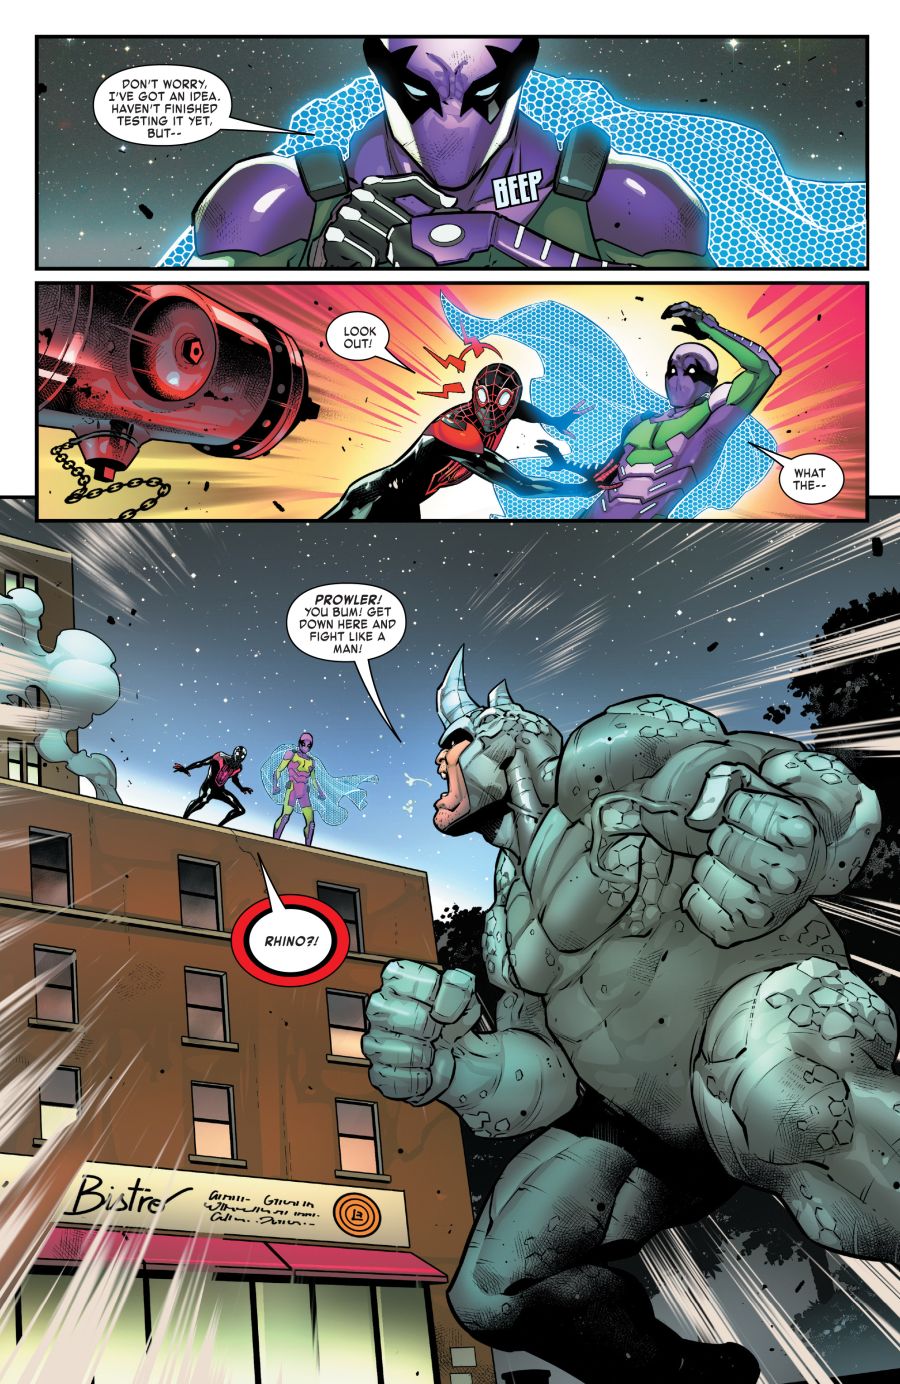 Miles Morales: Spider-Man #13